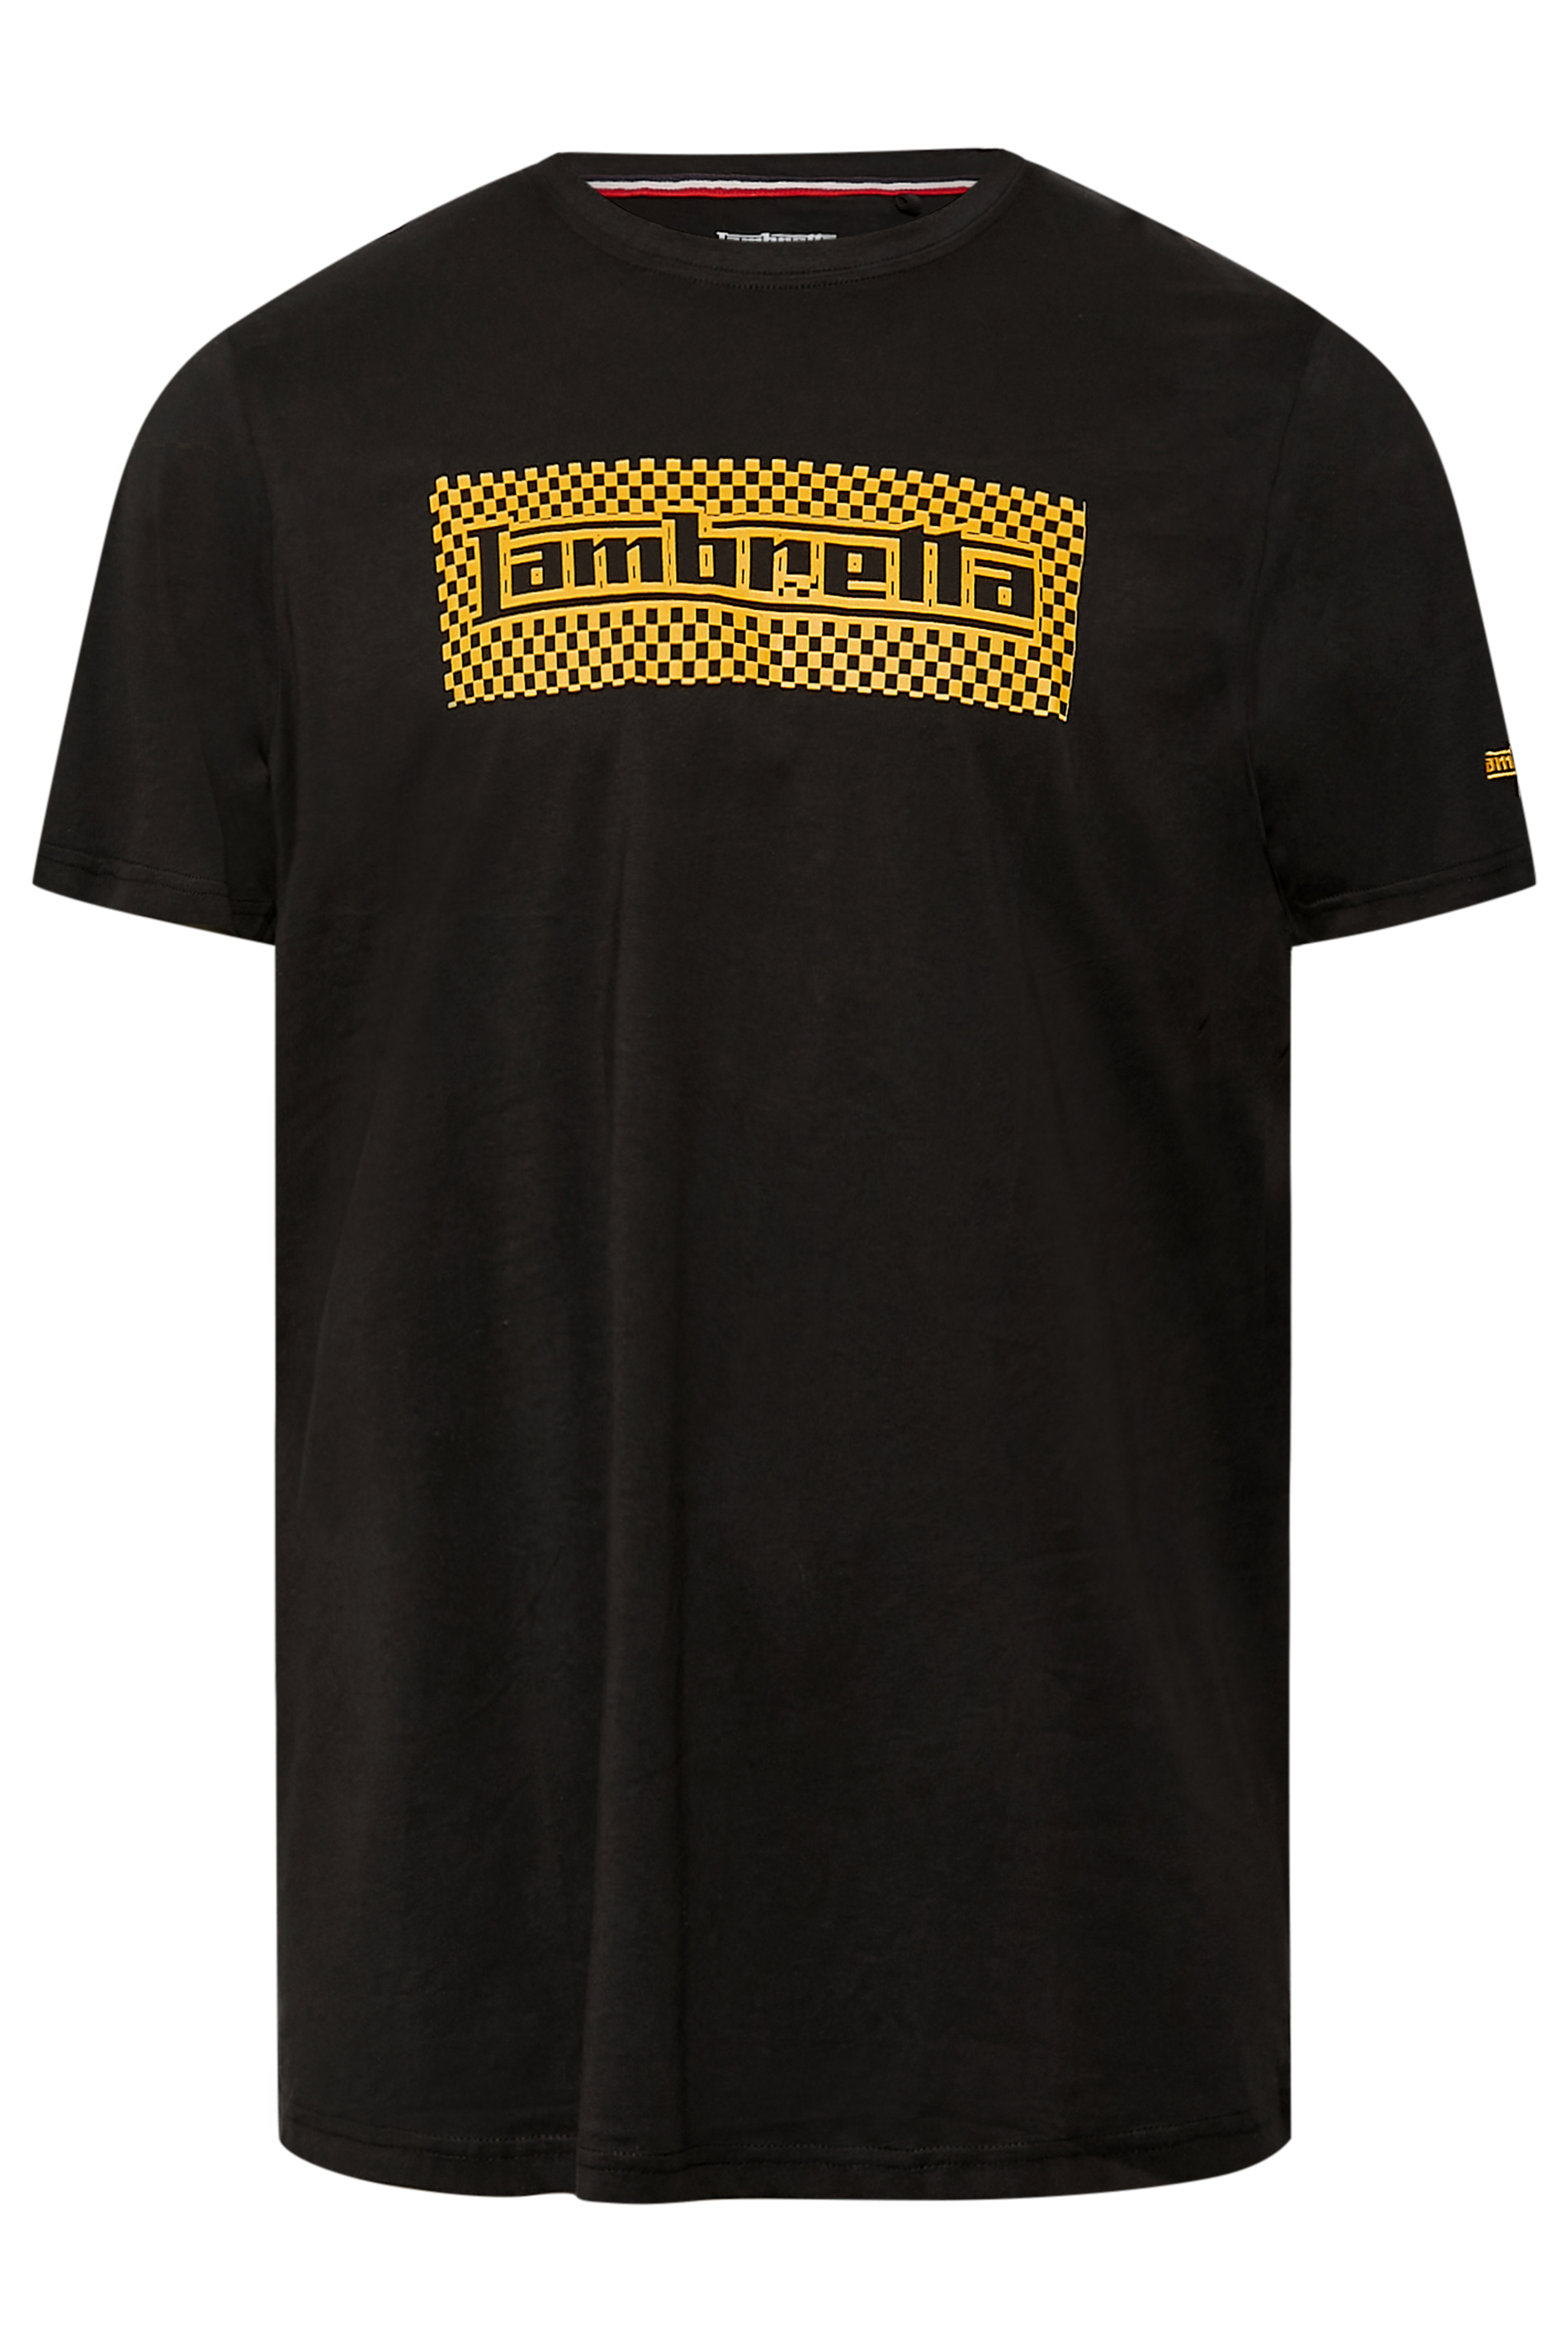 LAMBRETTA Big & Tall Black Two Tone Box Print T-Shirt | BadRhino 3